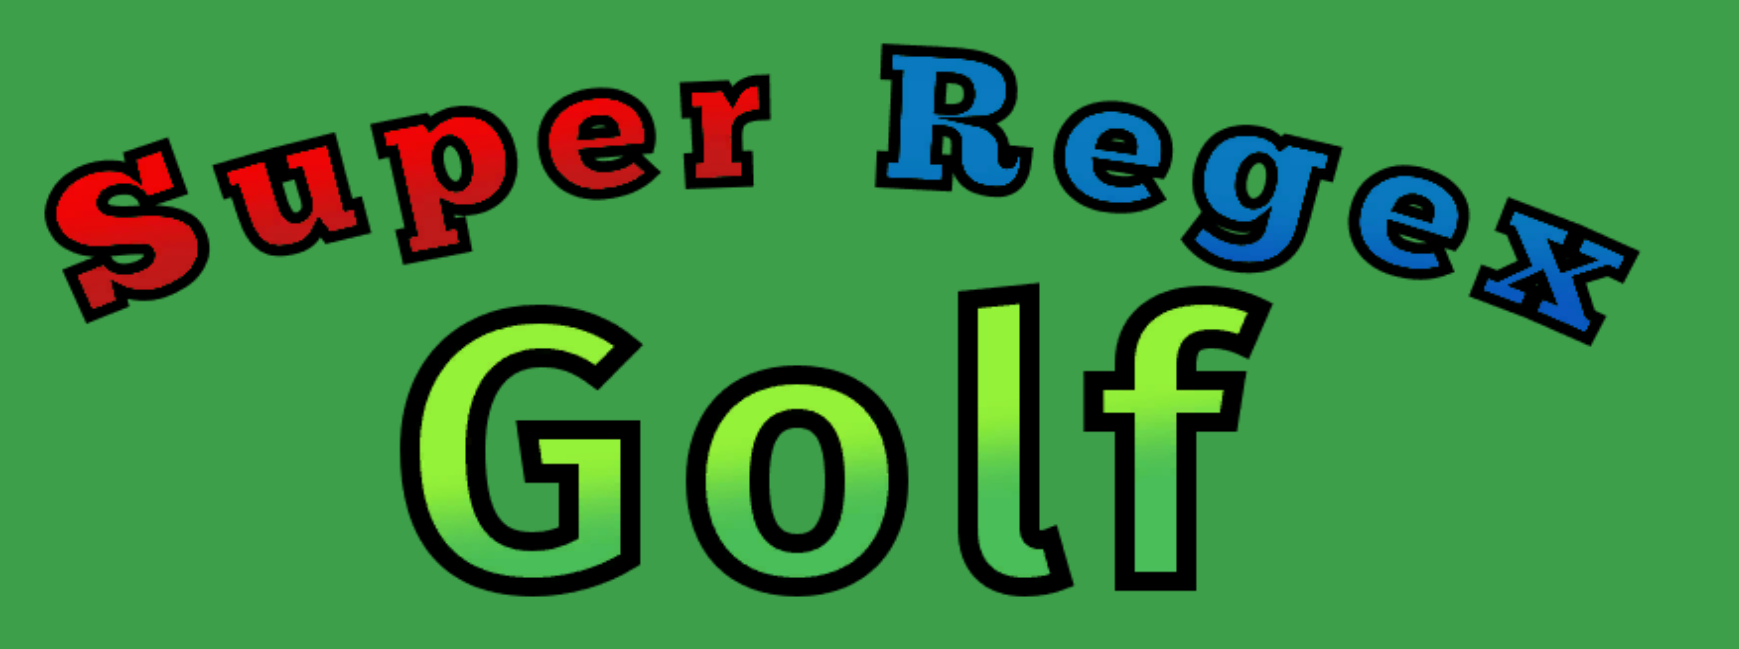 Super Regex Golf